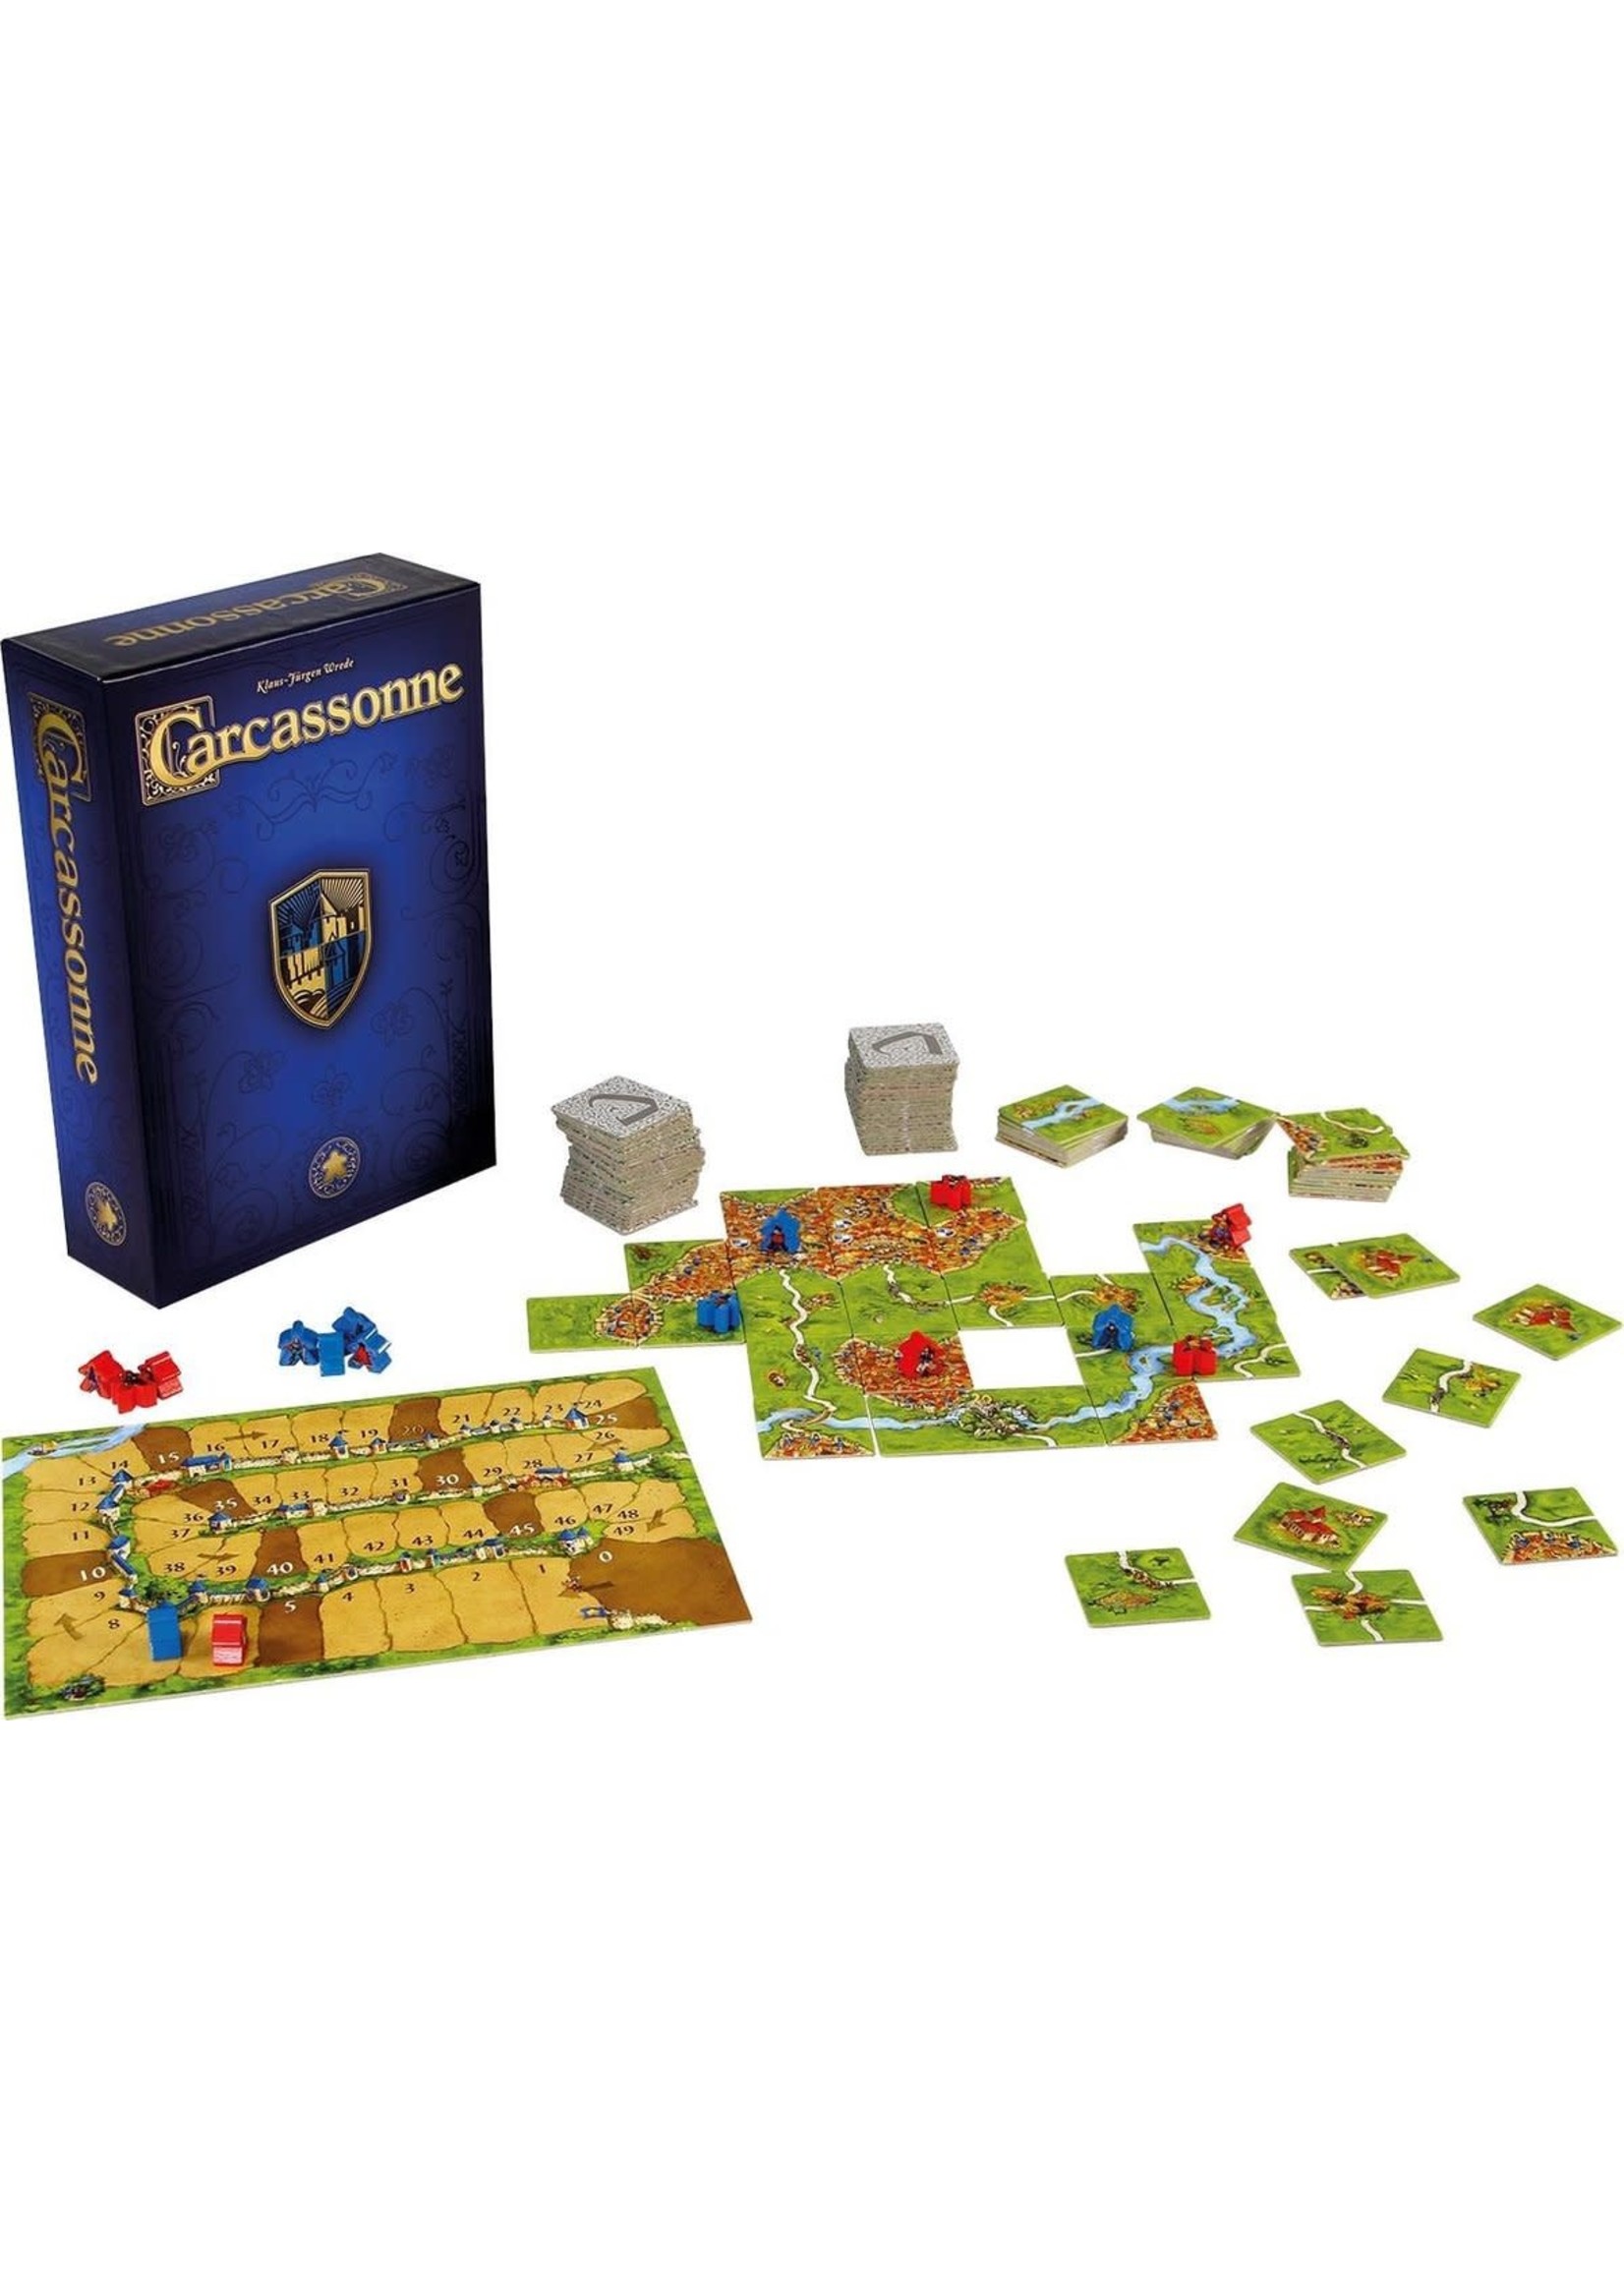 Spel Carcassonne 20 jaar jubileum editie -